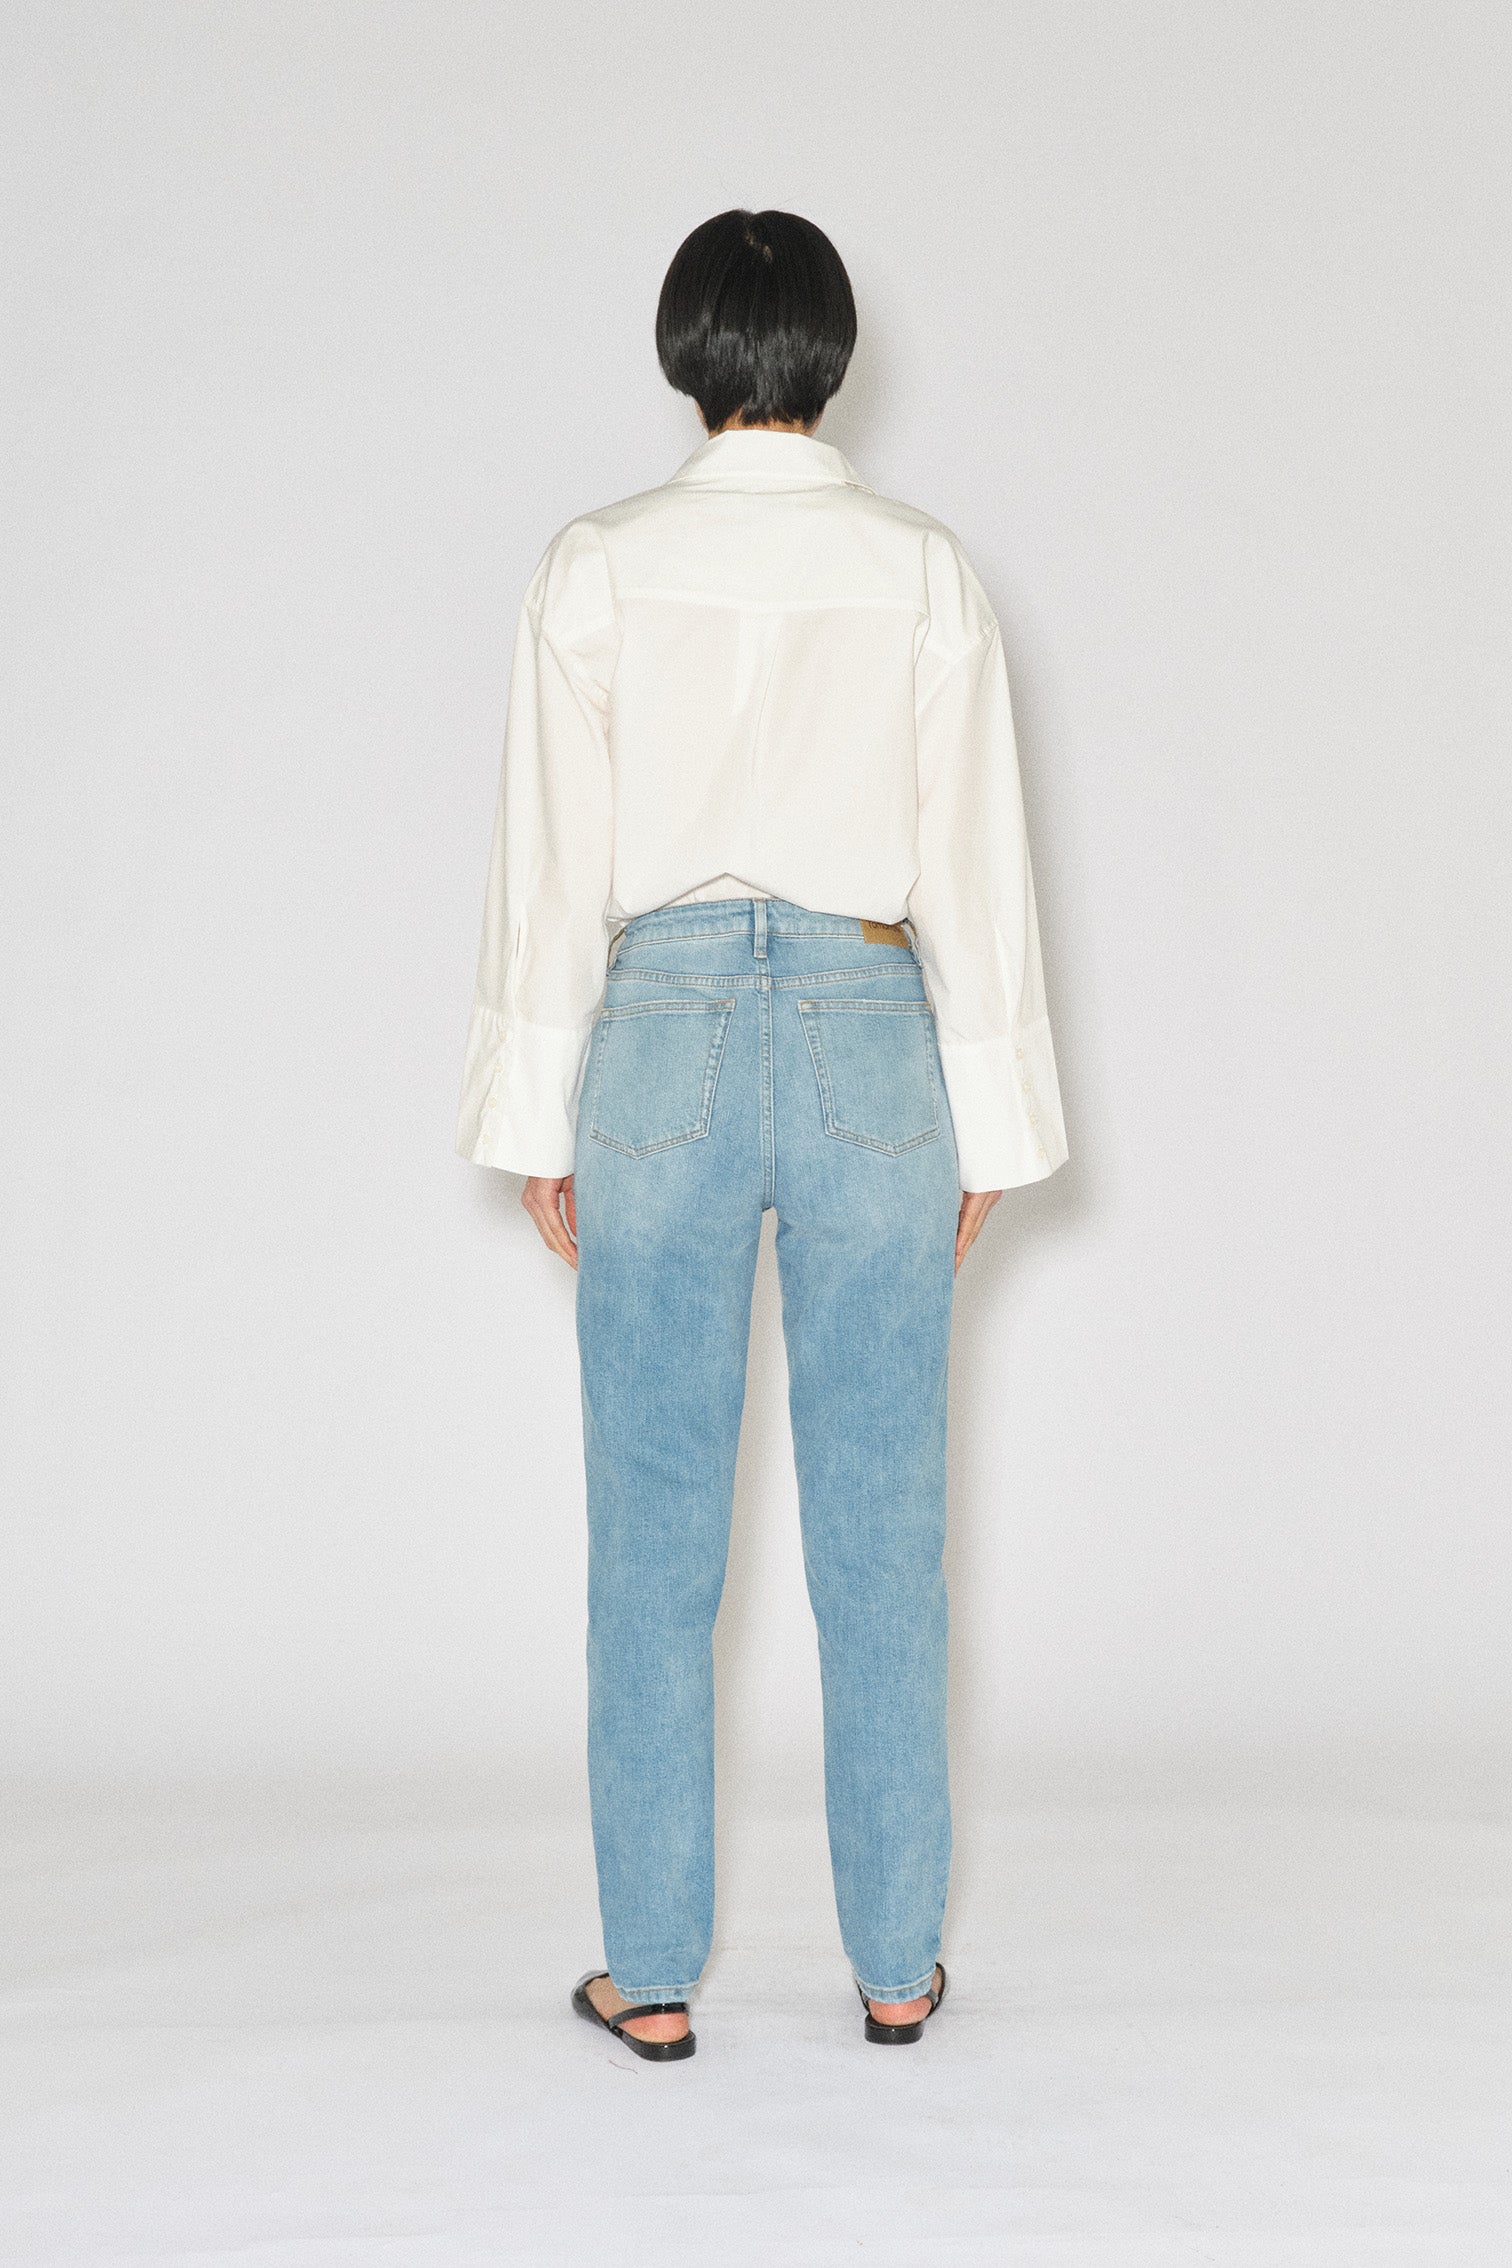 Tomorrow TMRW Hepburn Jeans - Piemonte Jeans & Pants 51 Denim Blue